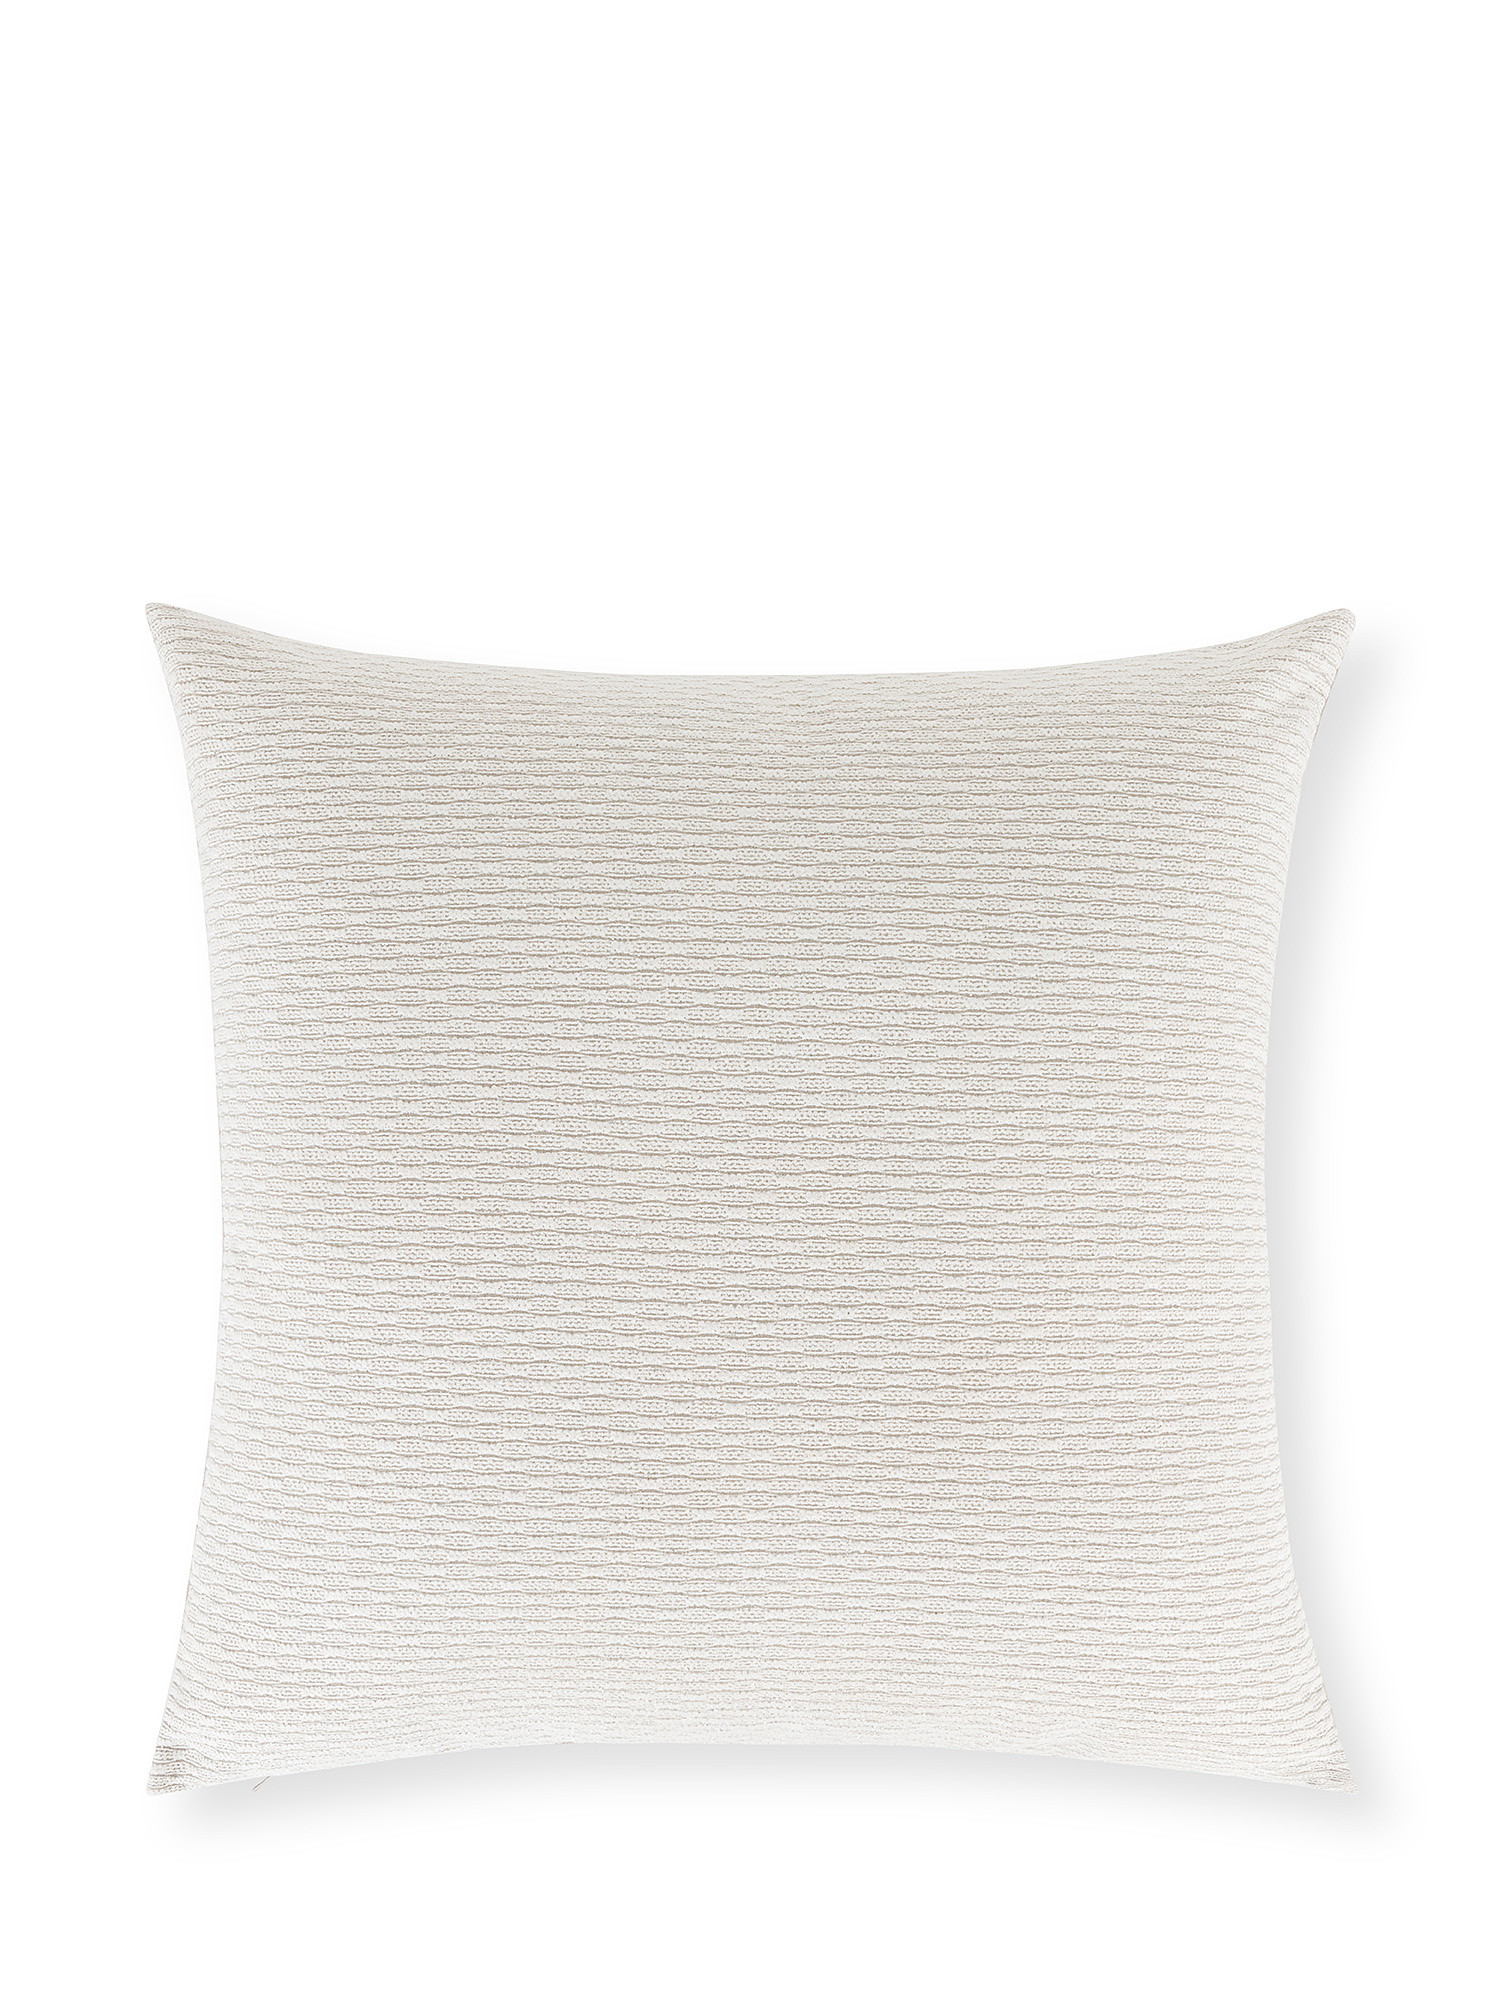 Jacquard cushion with geometric pattern 45x45cm, Grey, large image number 0